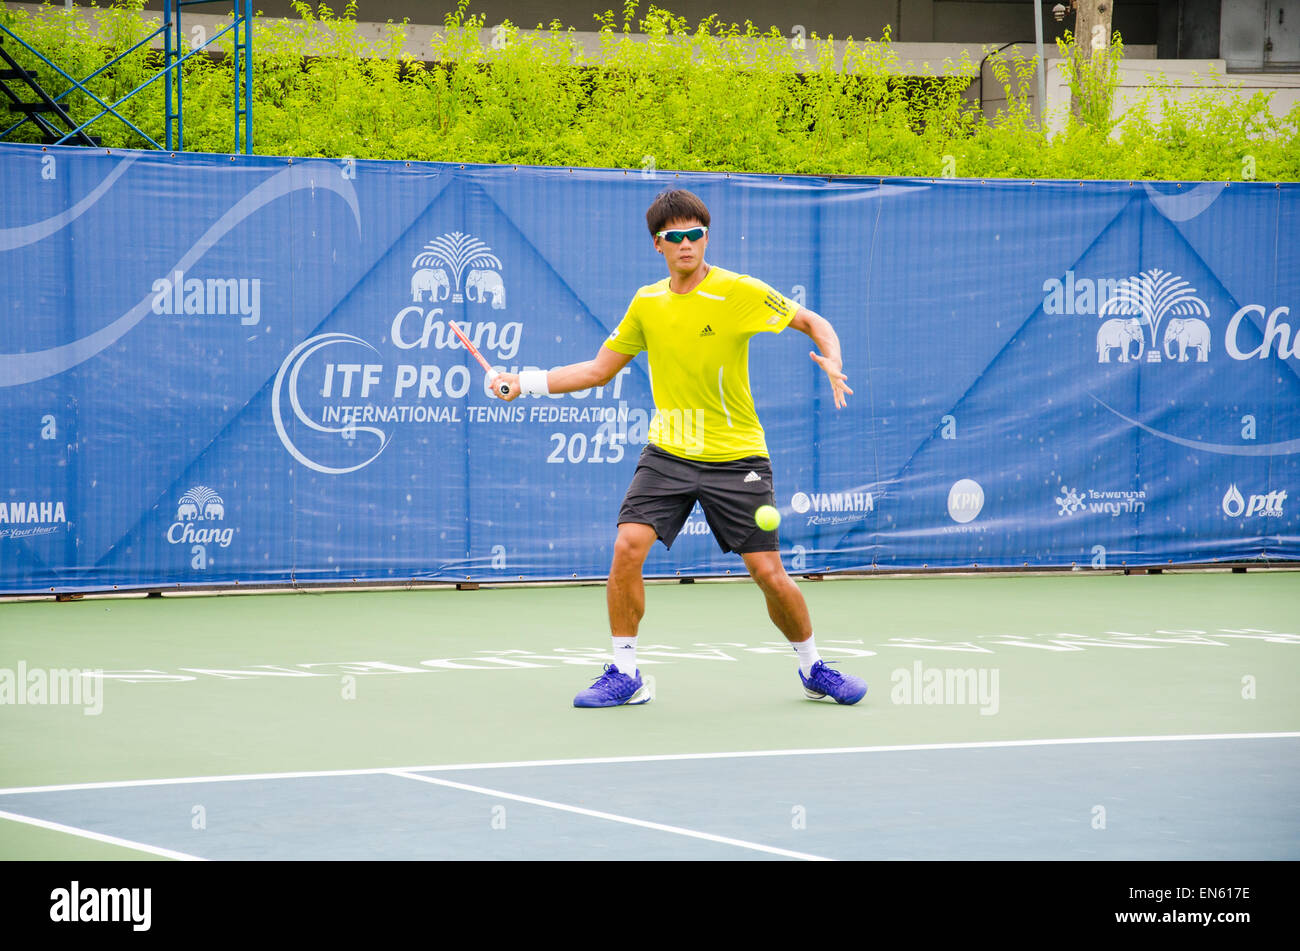 Bangkok, Tailandia. 28 Aprile, 2015. Kittiphong W. di Thailandia a Chang ITF (Federazione Internazionale di Tennis) circuito Pro 2015 aprile 28, 2015 a Bangkok, in Thailandia. Credito: Chatchai Somwat/Alamy Live News Foto Stock